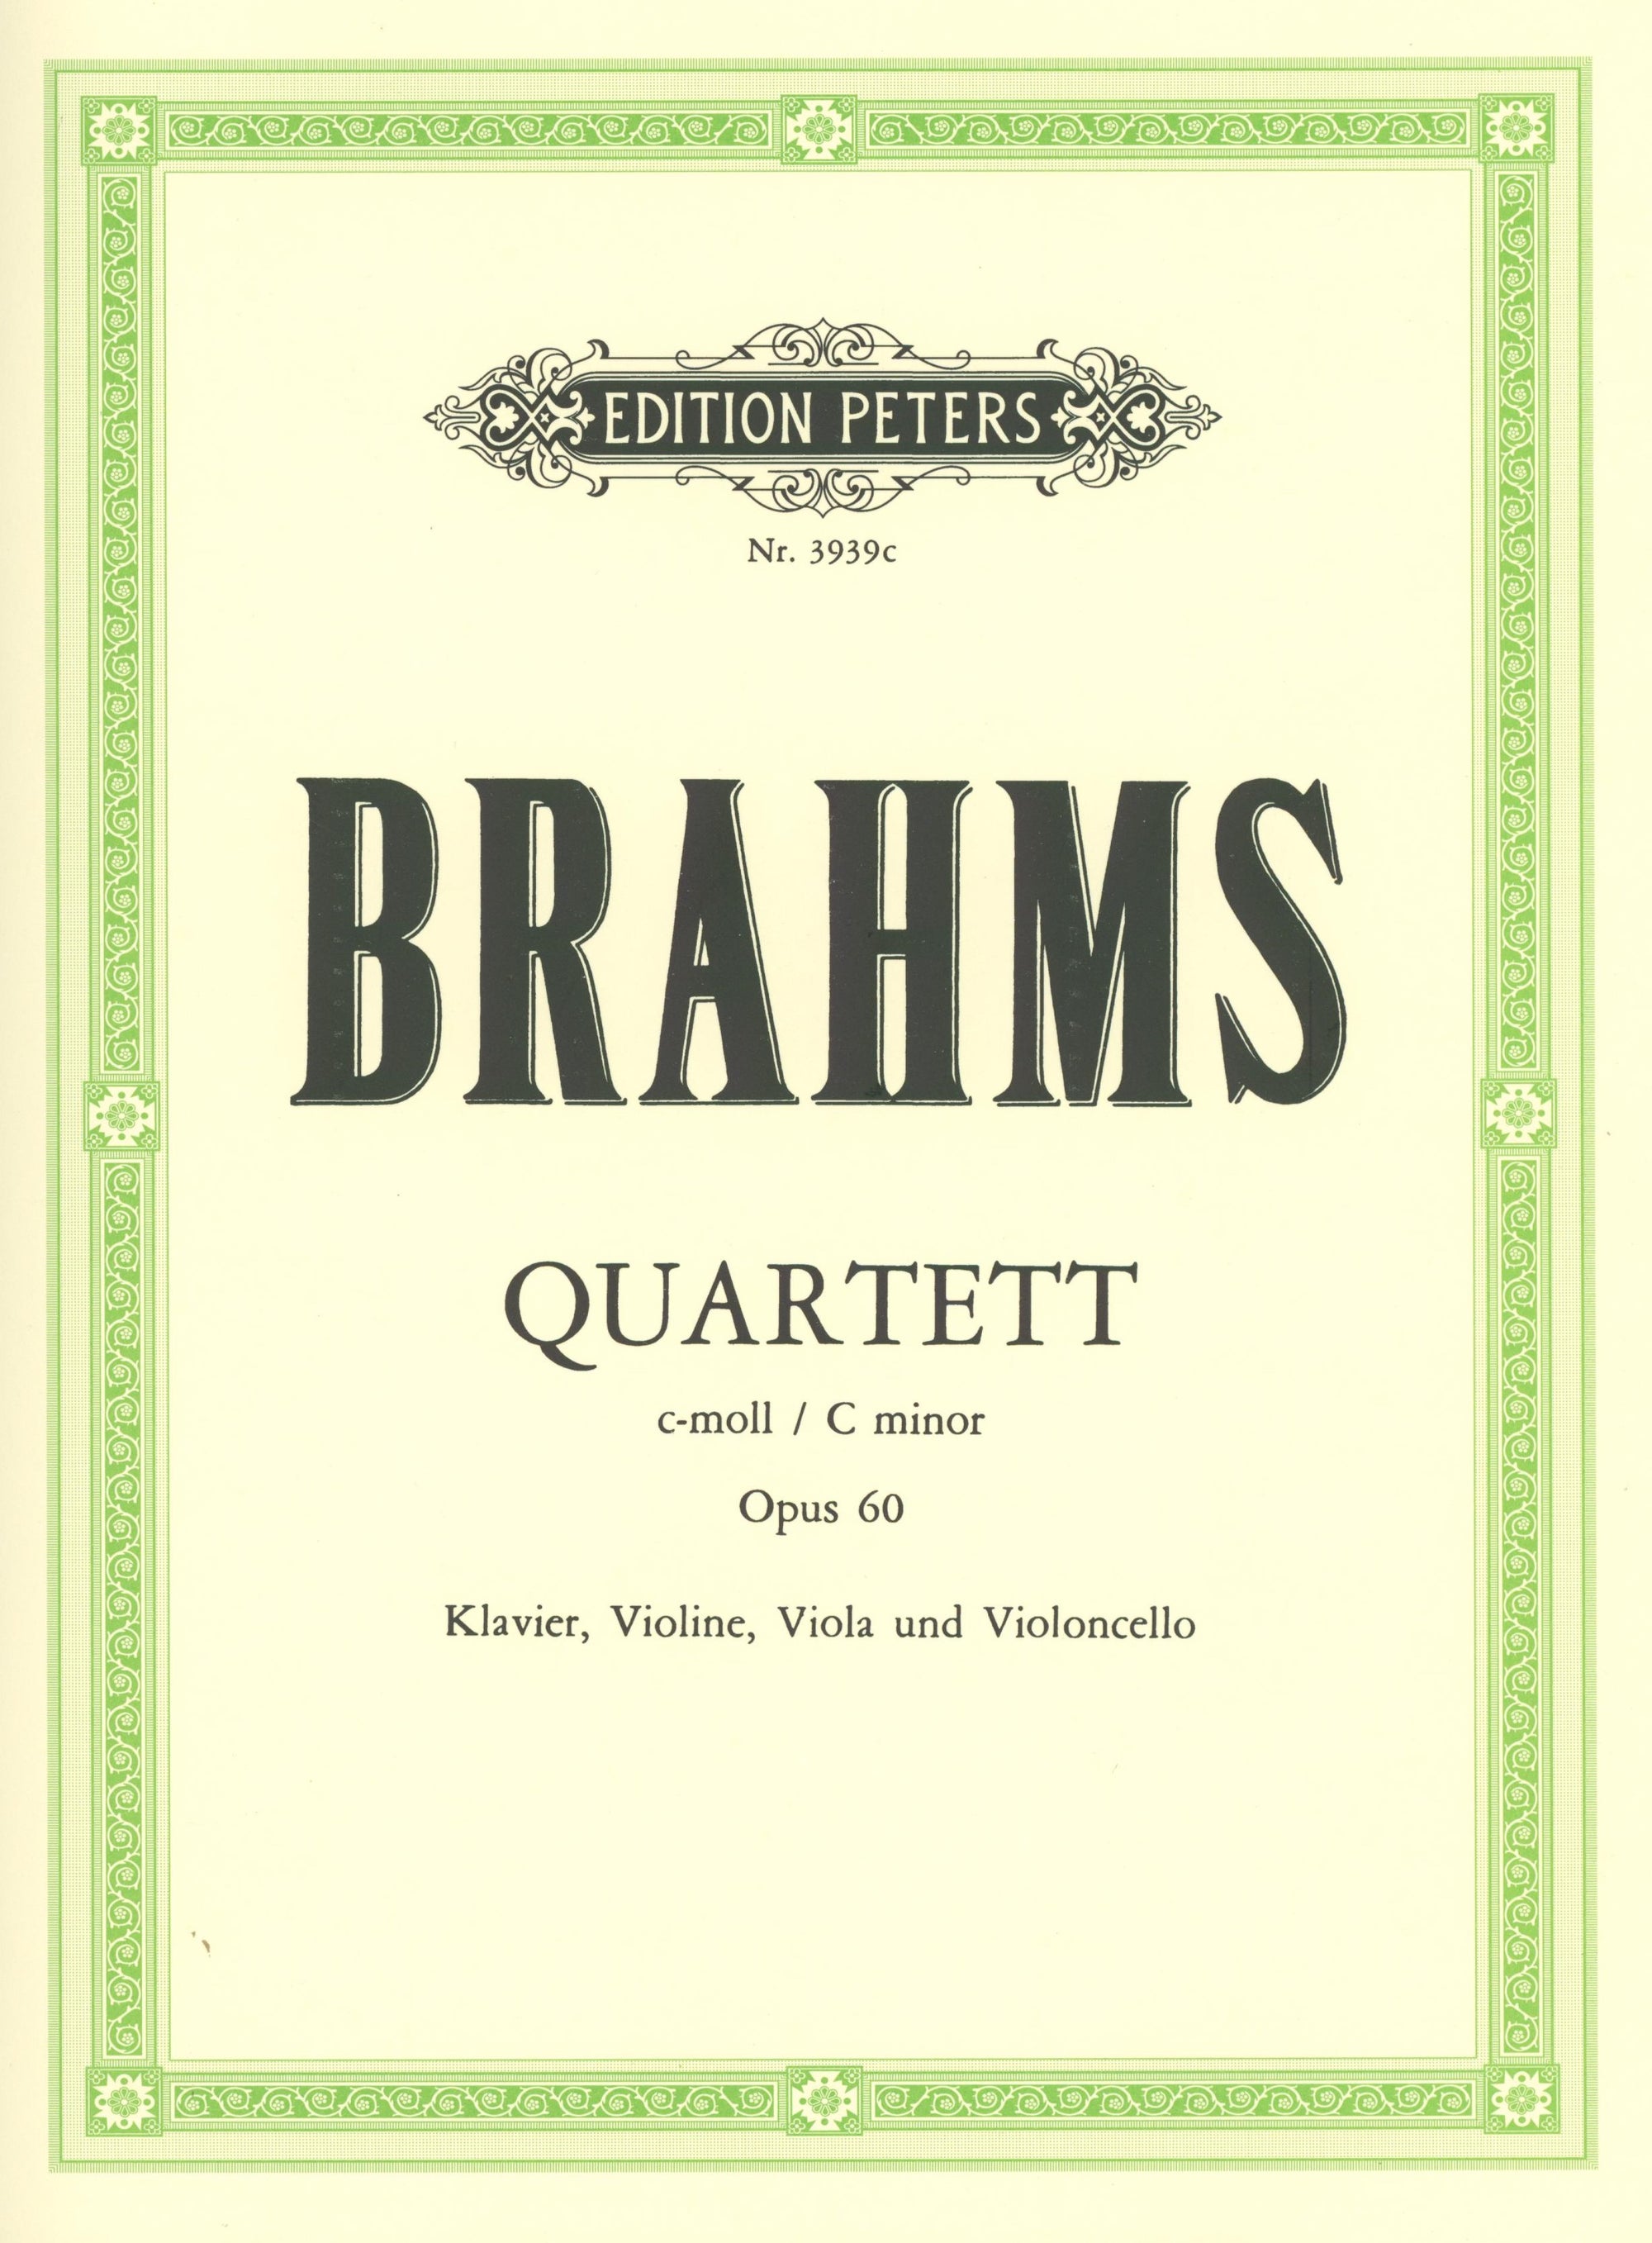 Brahms: Piano Quartet No. 3 in C Minor, Op. 60